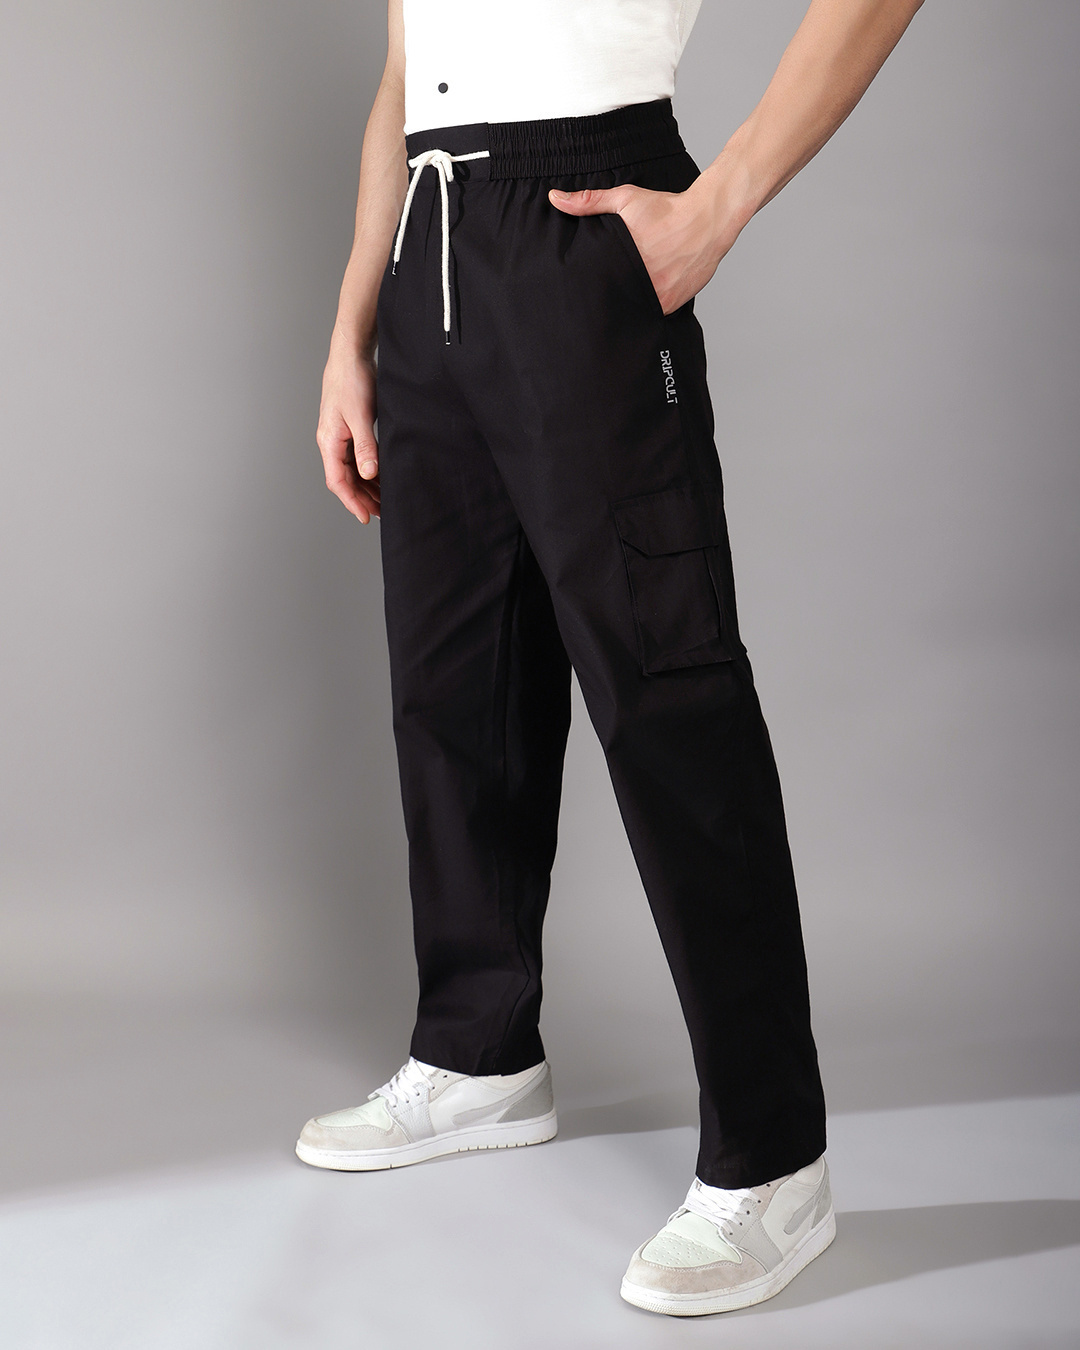 Buy Men's Space Black Loose Comfort Fit Baggy Cargo Pants Online at ...